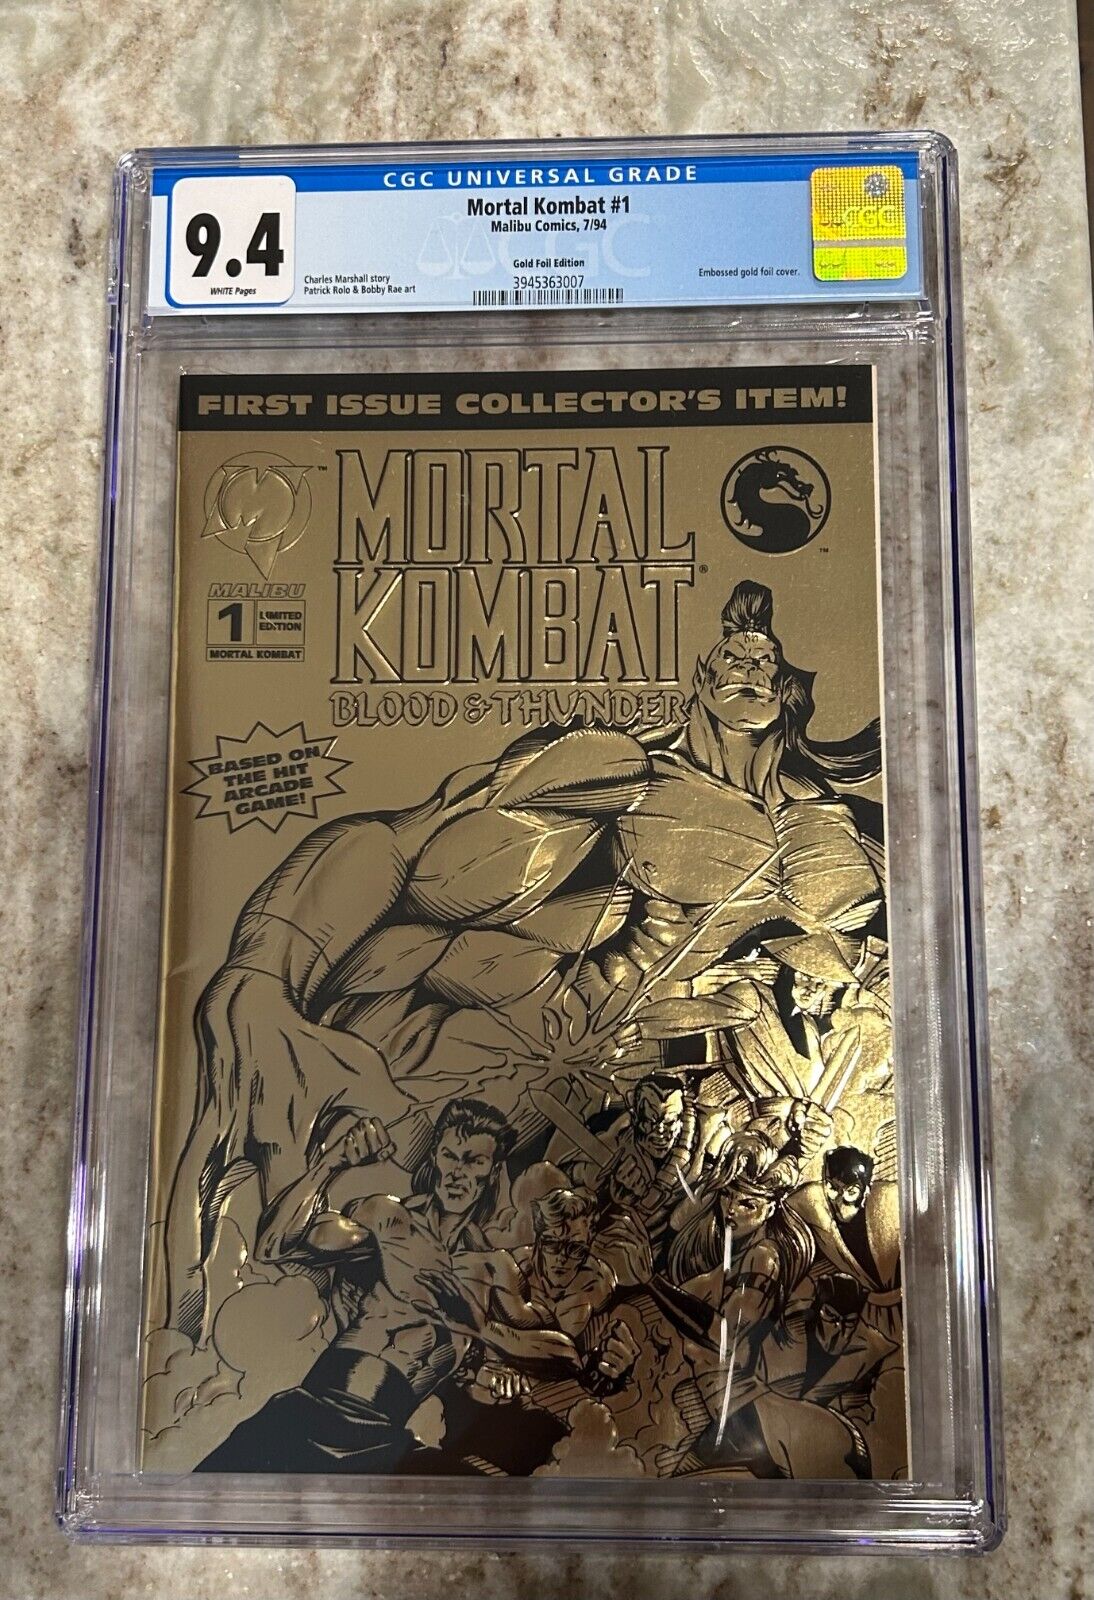 Mortal Kombat #1 - Embossed Gold Foil Edition Cover - CGC Grade 9.4